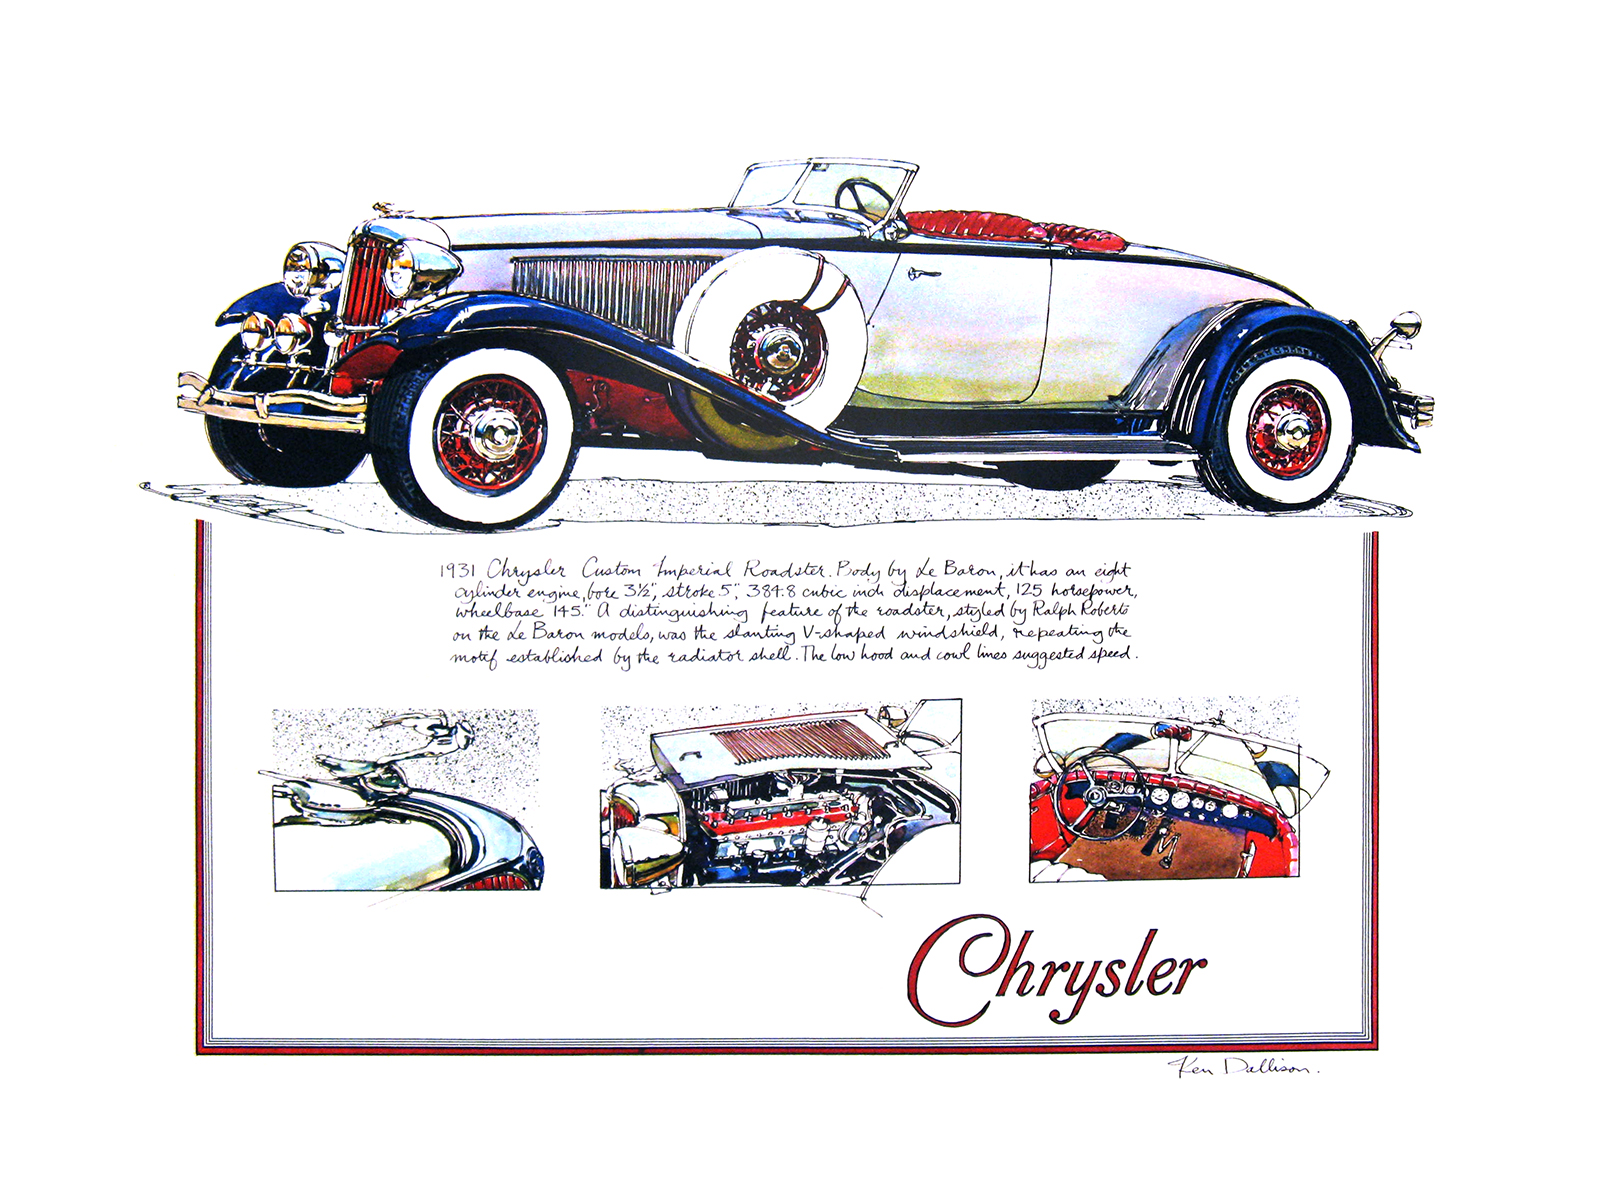 1931 Chrysler Custom Imperial Roadster body by LeBaron: Illustrated by Ken Dallison